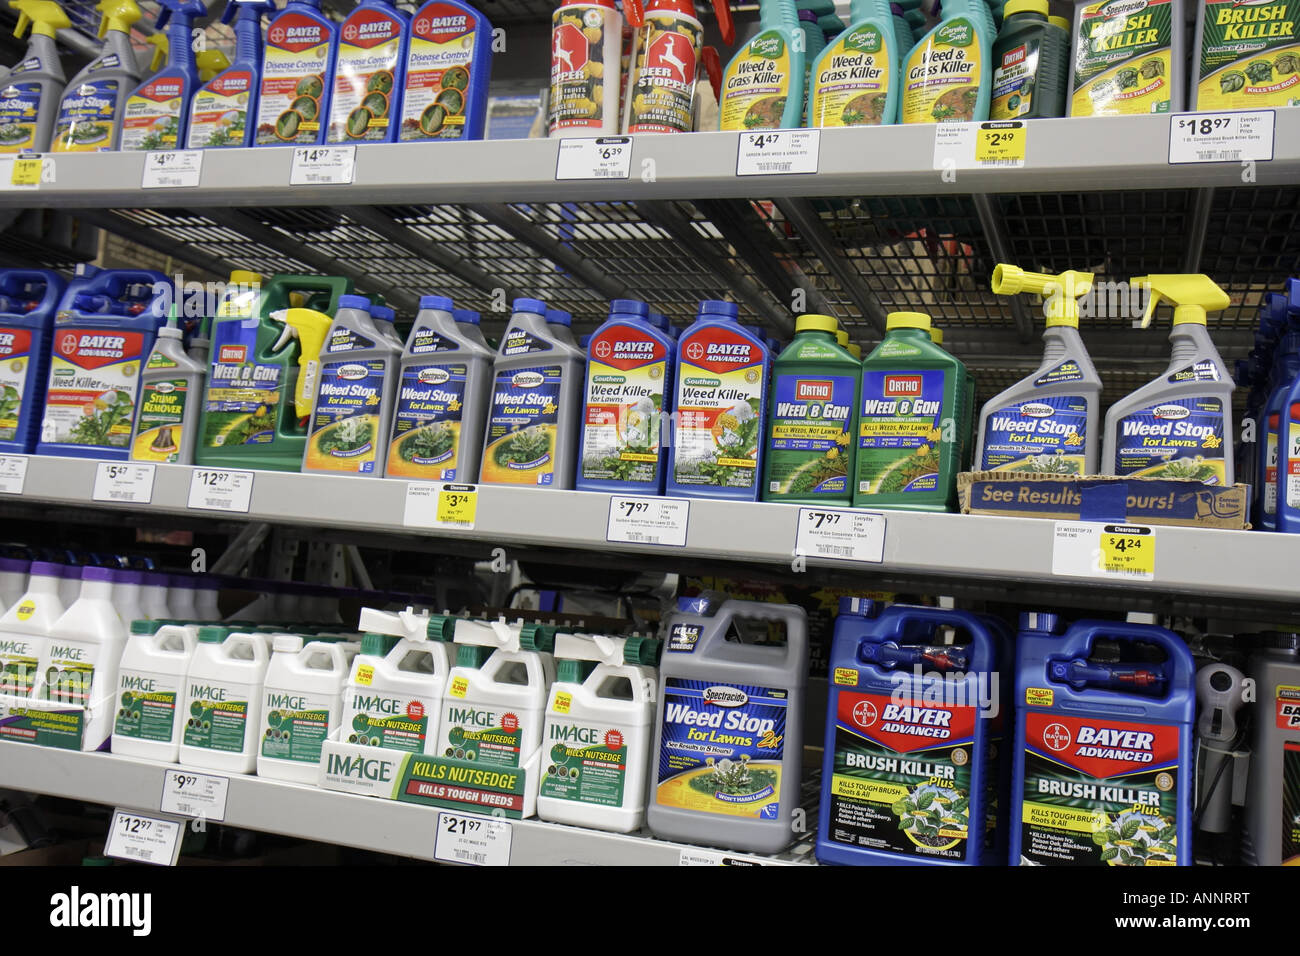 Florida Hialeah Home Depot Gartenartikel Weed Killer Chemikalien